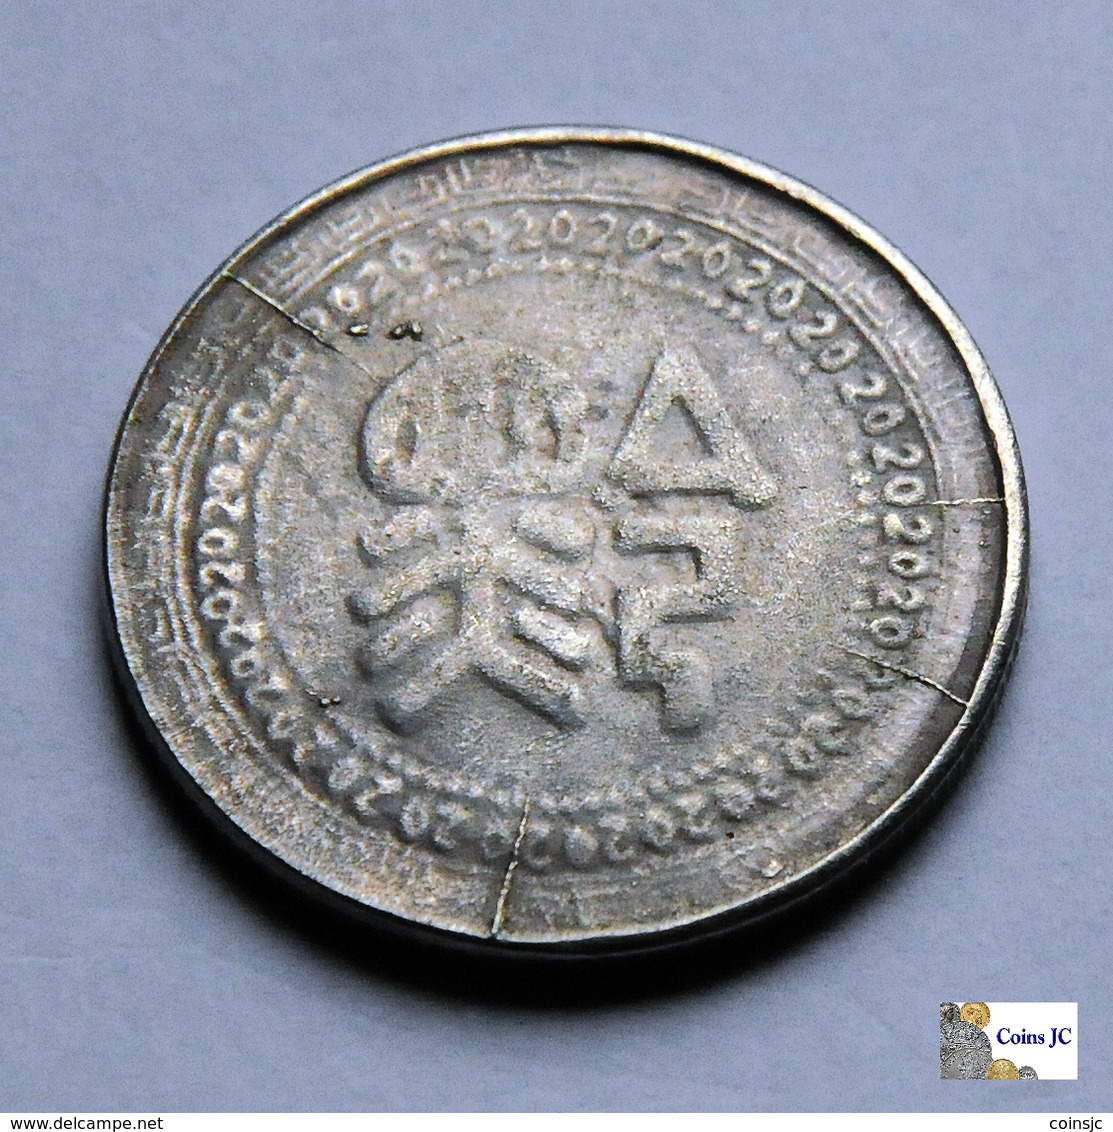 China - Kweicow  Province - 20 Cents - 1949 - FALSE - Counterfeits